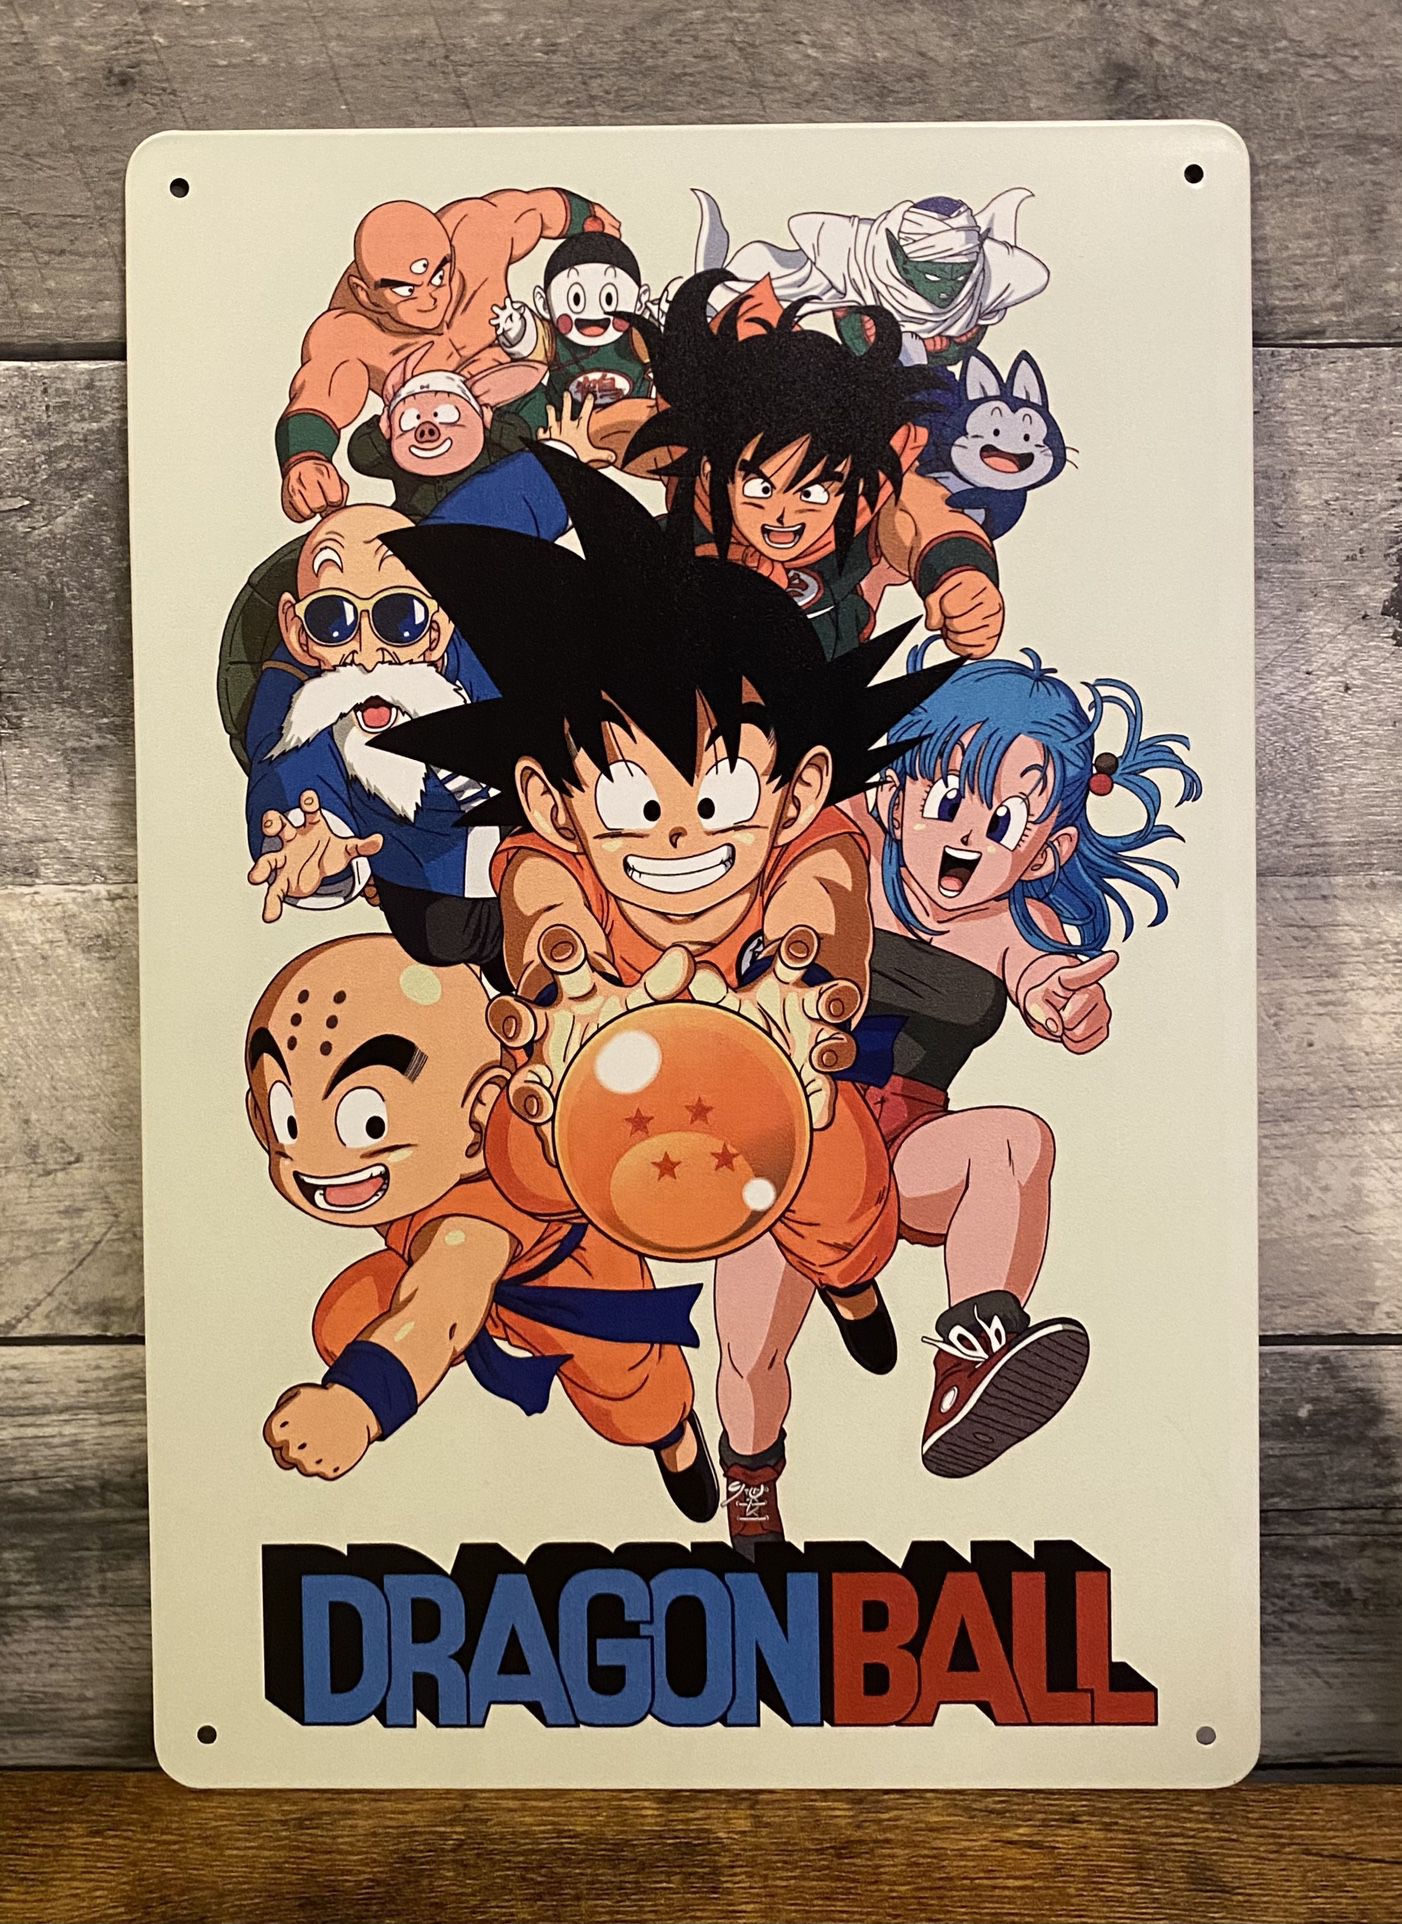 Dragon Ball Dbz Goku Anime Man Cave Game Room Metal Tin Art Poster Sign 8”x12”